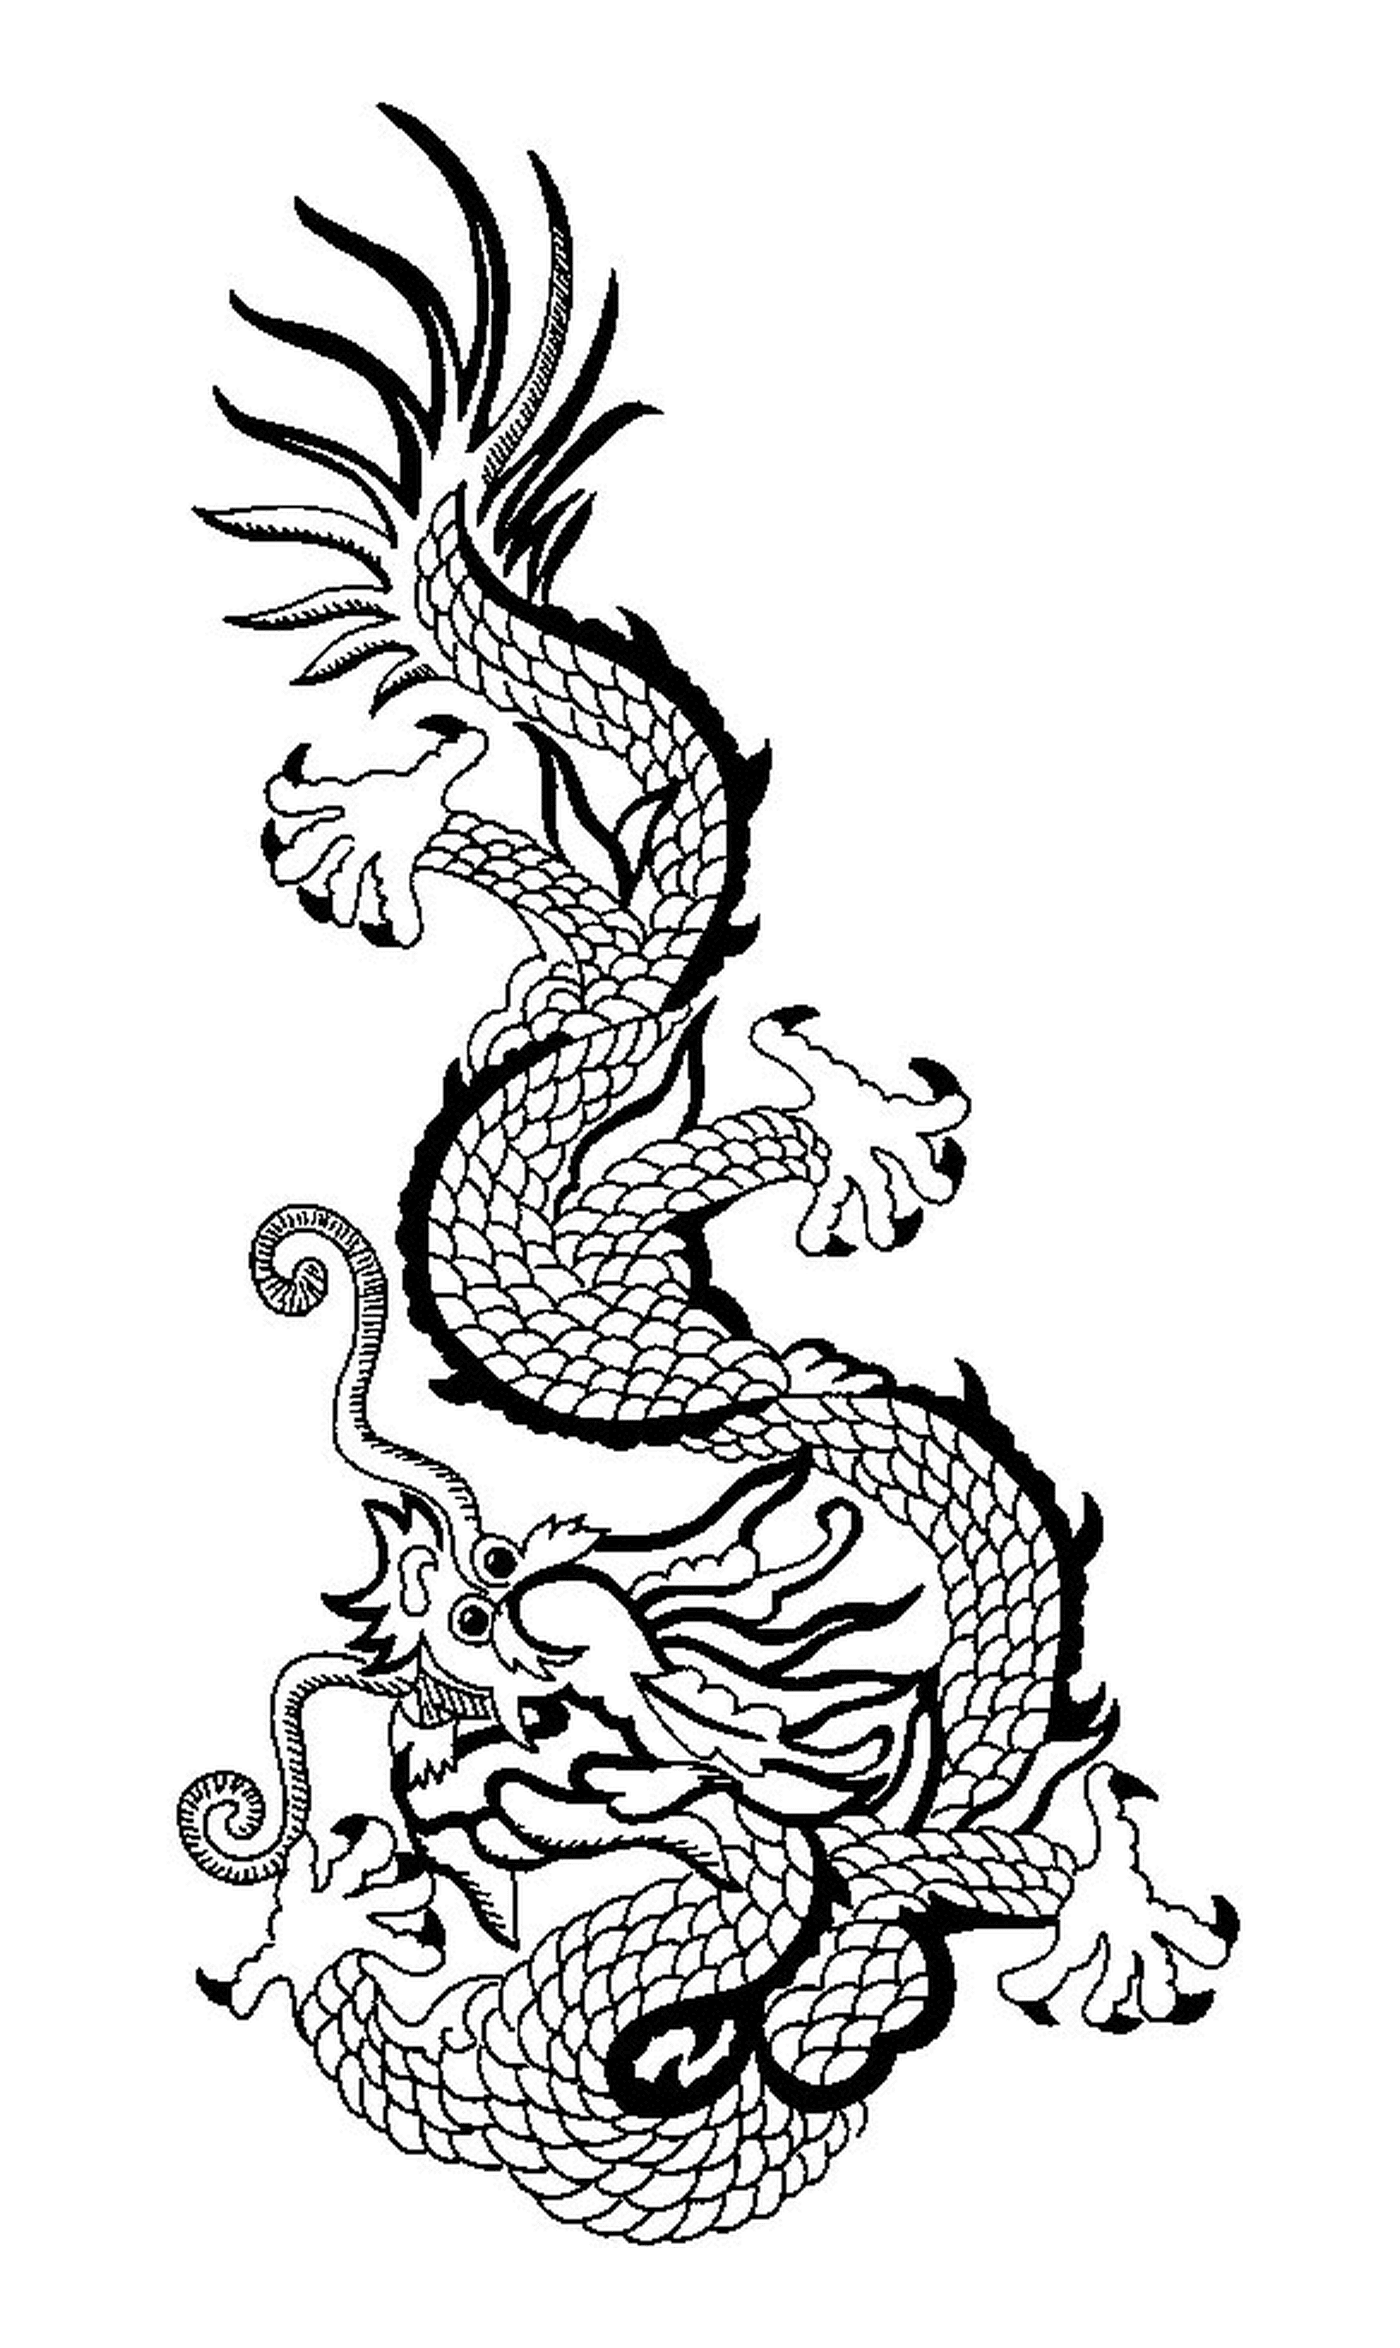  A Japanese dragon 